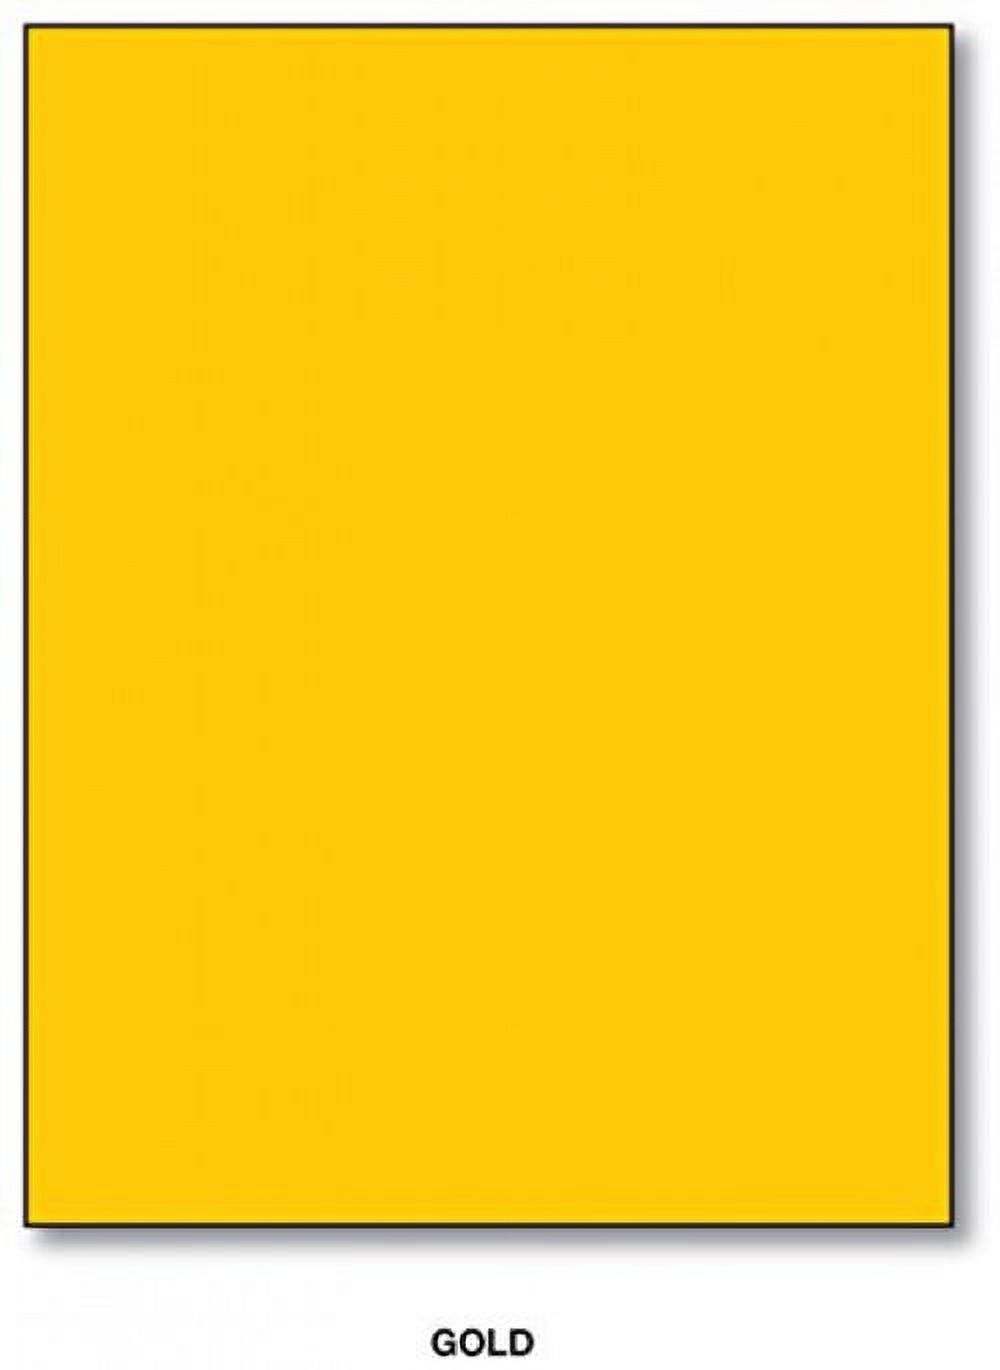 Mohawk BriteHue Bright Color Paper | Gold | 24lb Bond / 60lb Text Paper |  8.5" x 11" (Letter Size) | 100 Sheets Per Pack - image 2 of 2